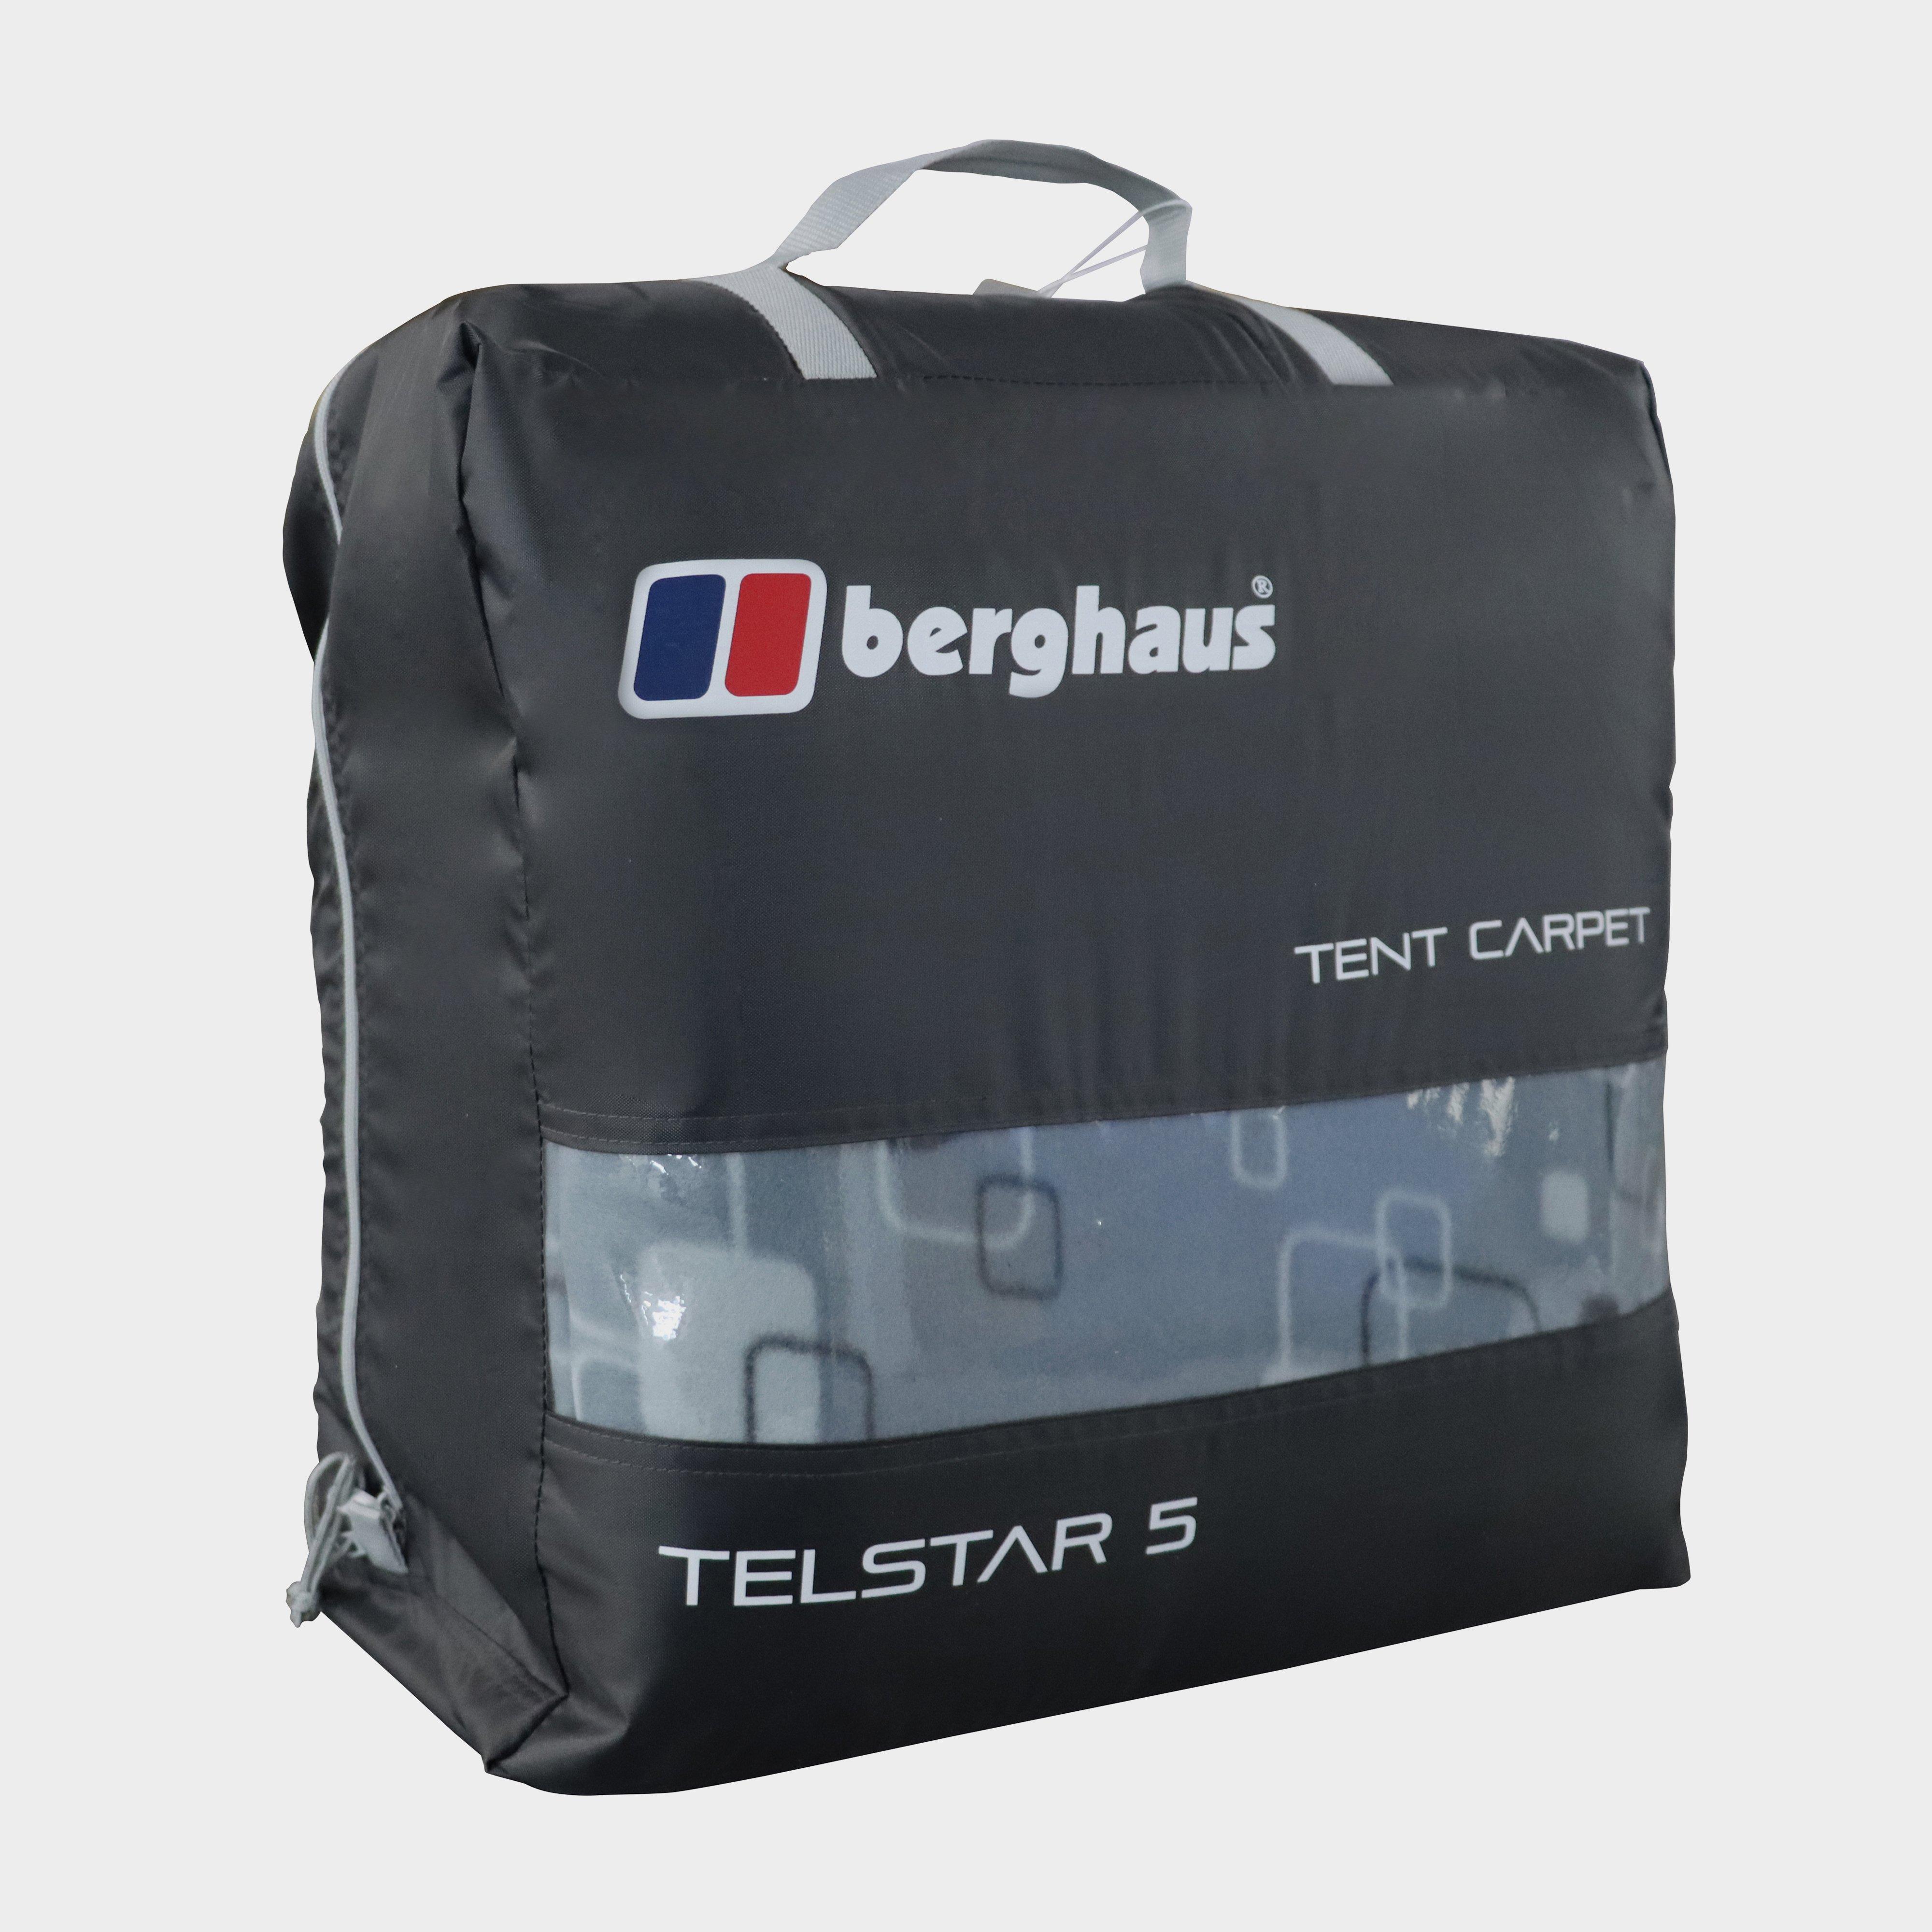  Berghaus Telstar 5 Tent Carpet, Grey